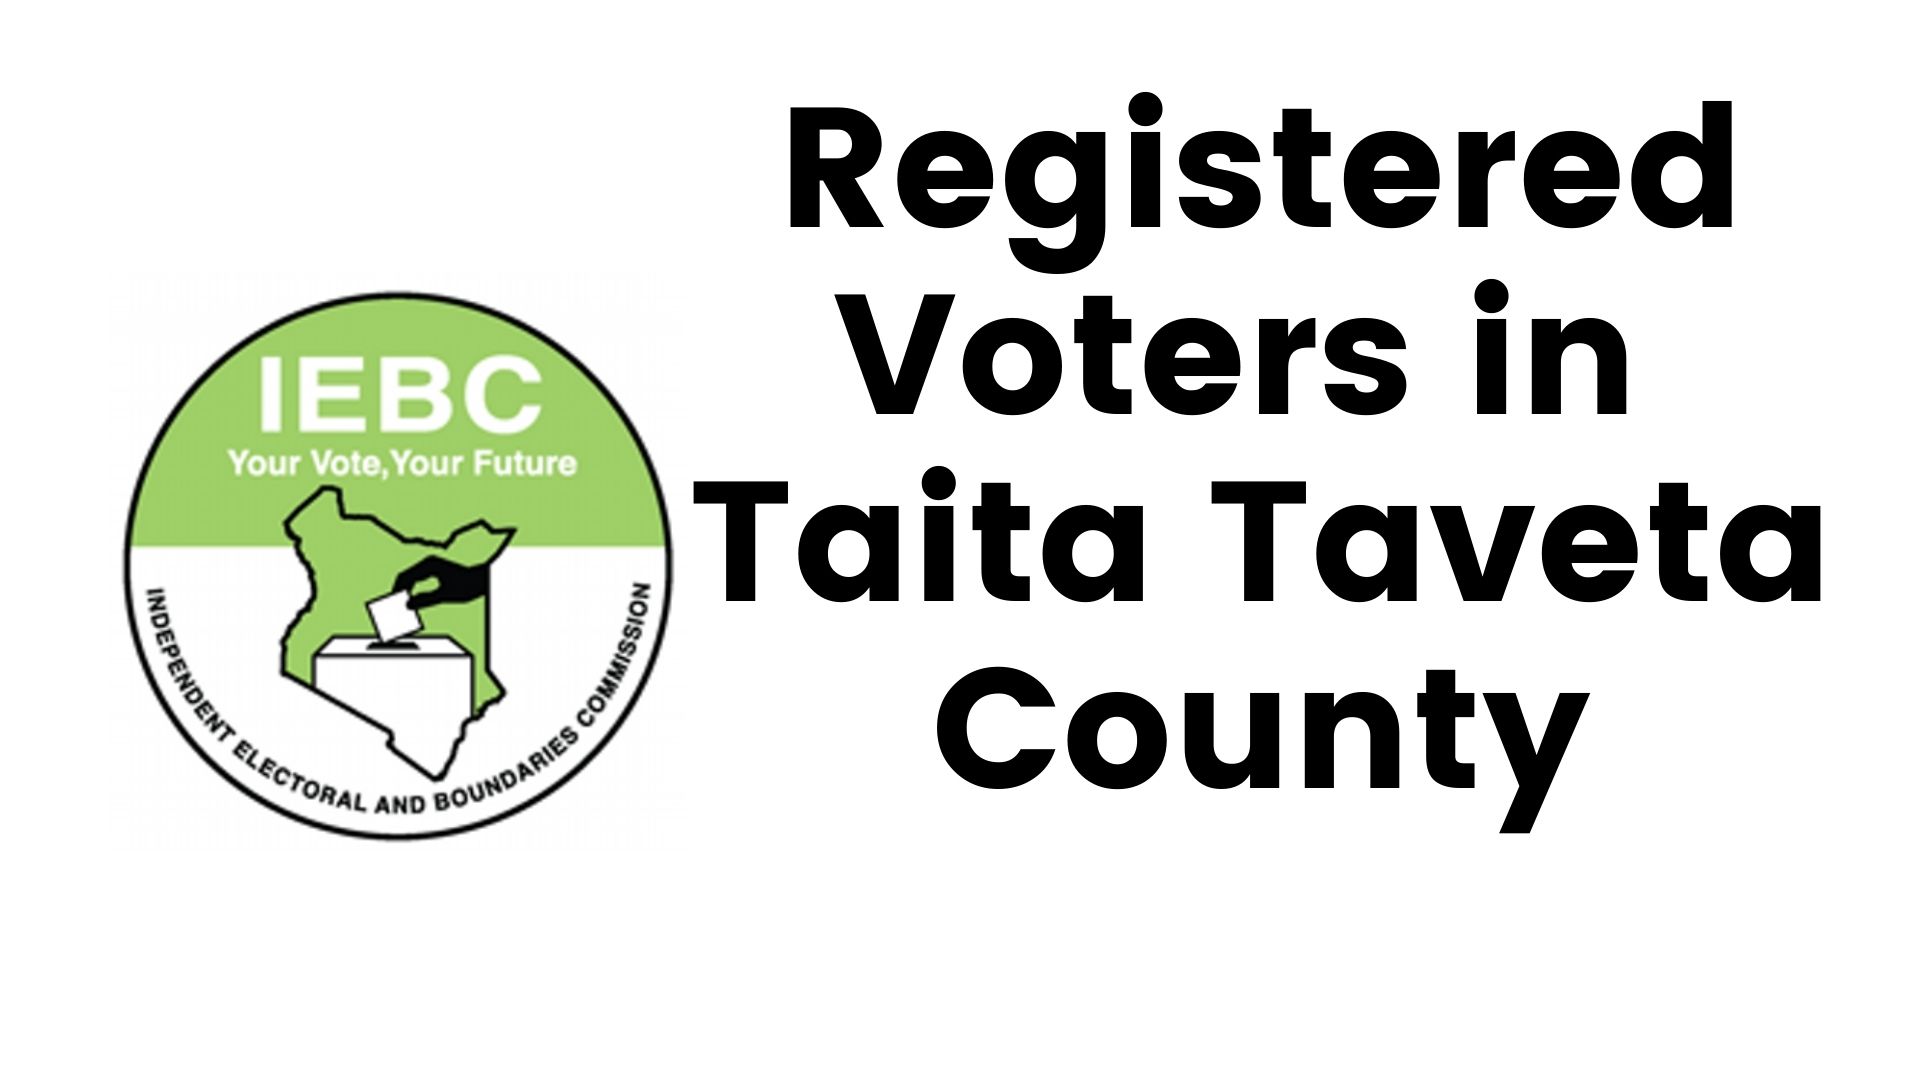 IEBC Taita Taveta County Registered Voters